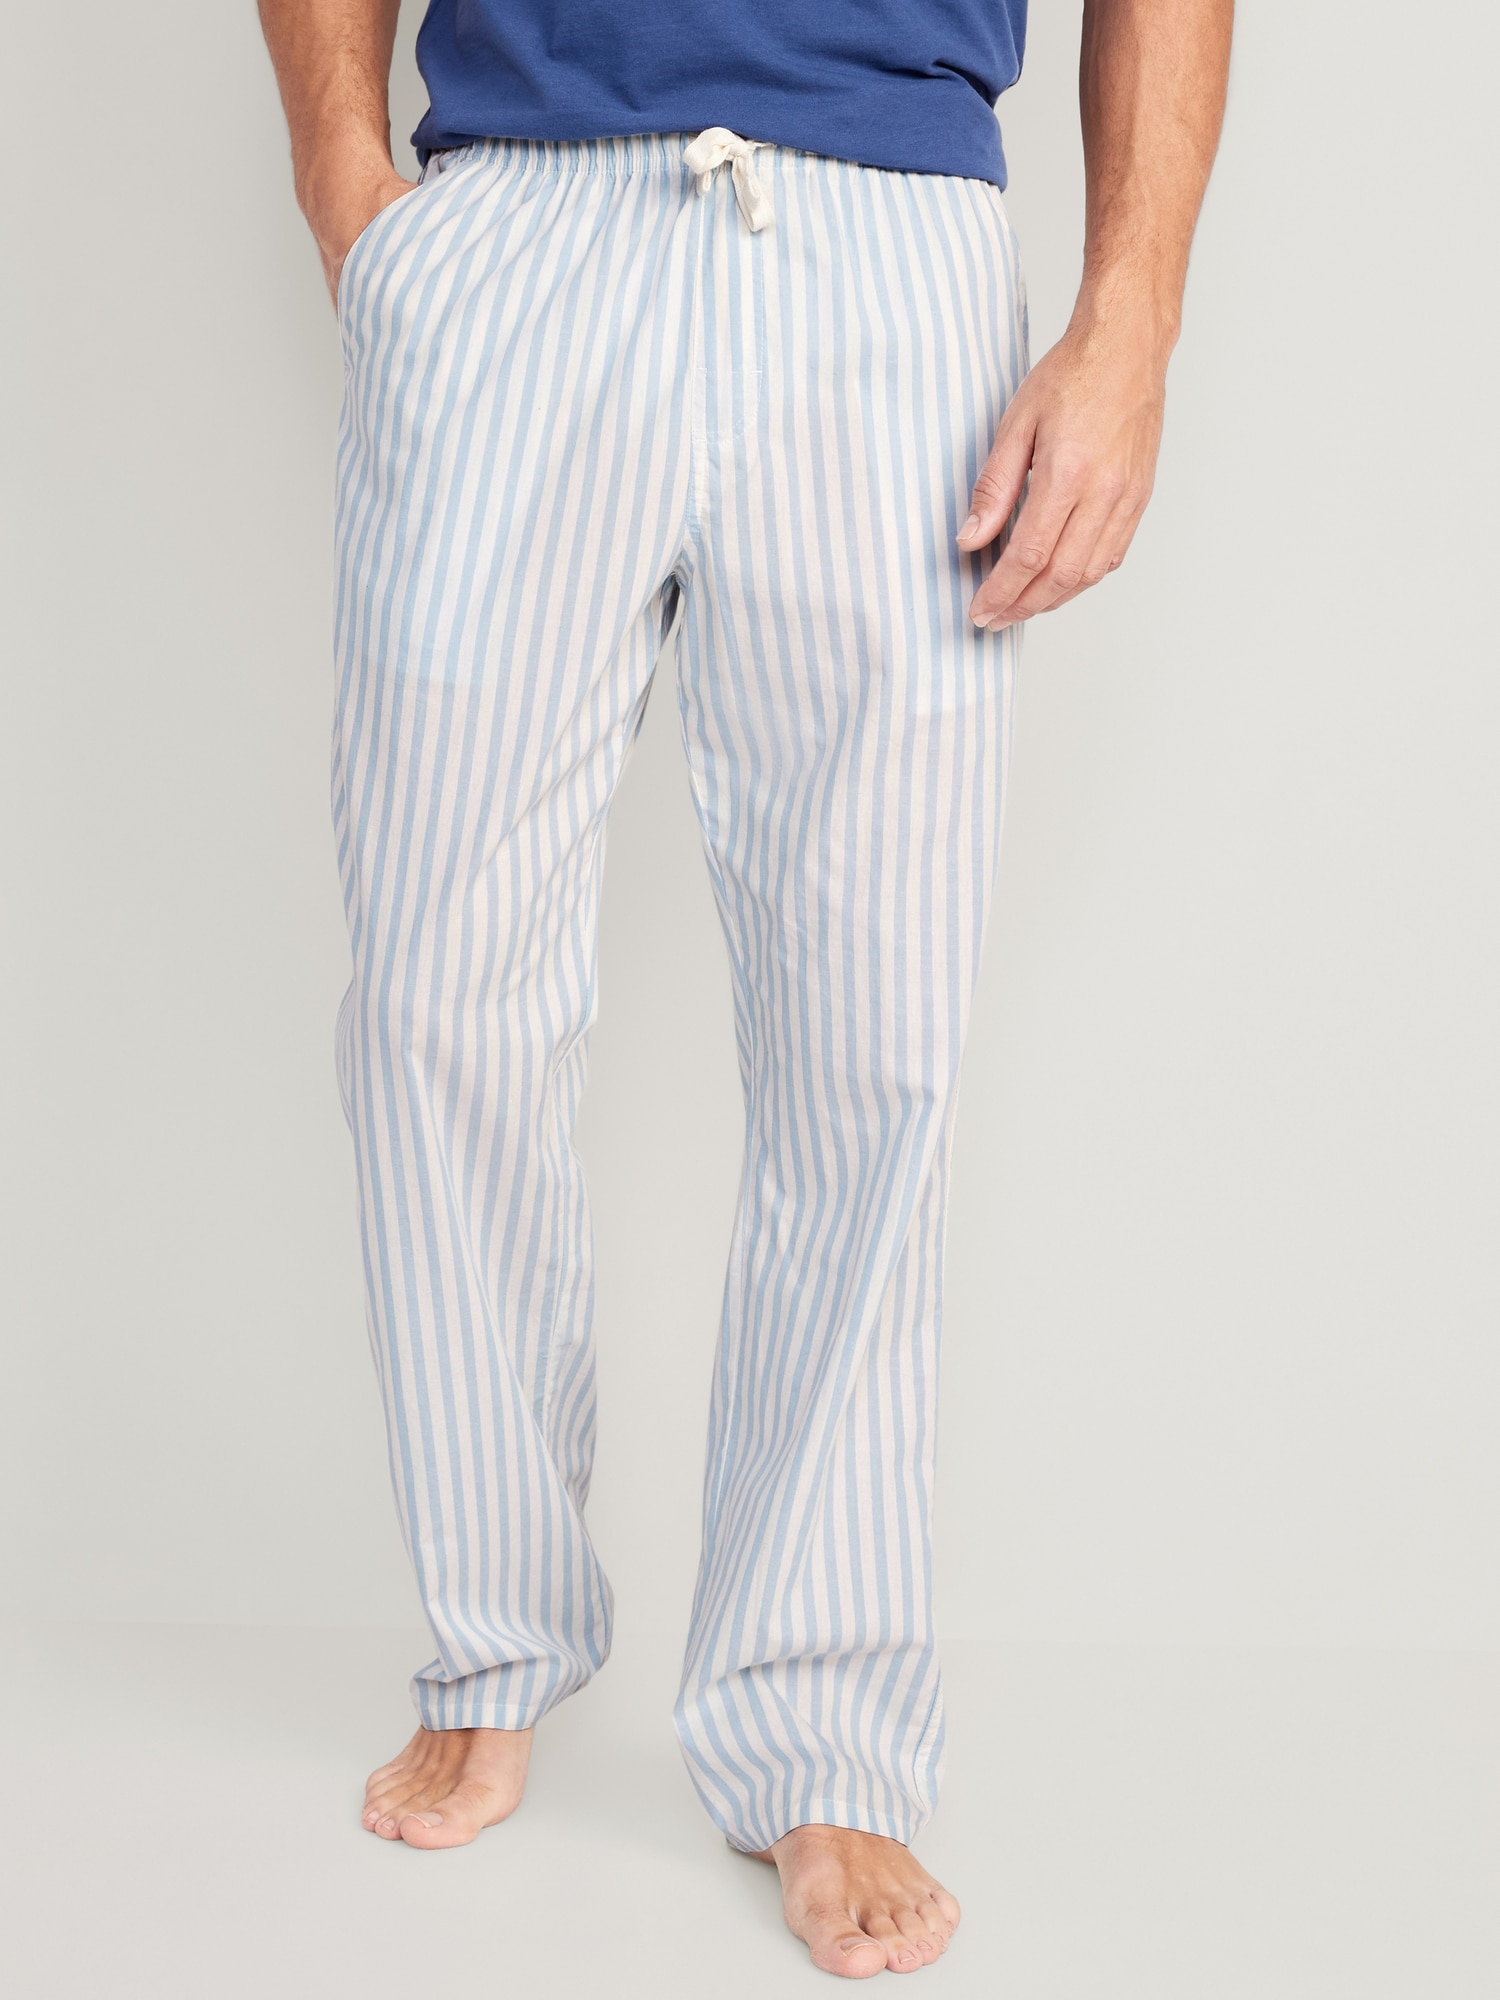 Leisureland Men's Cotton Poplin Pajama Lounge Sleep Boxer Shorts Navy Plaid